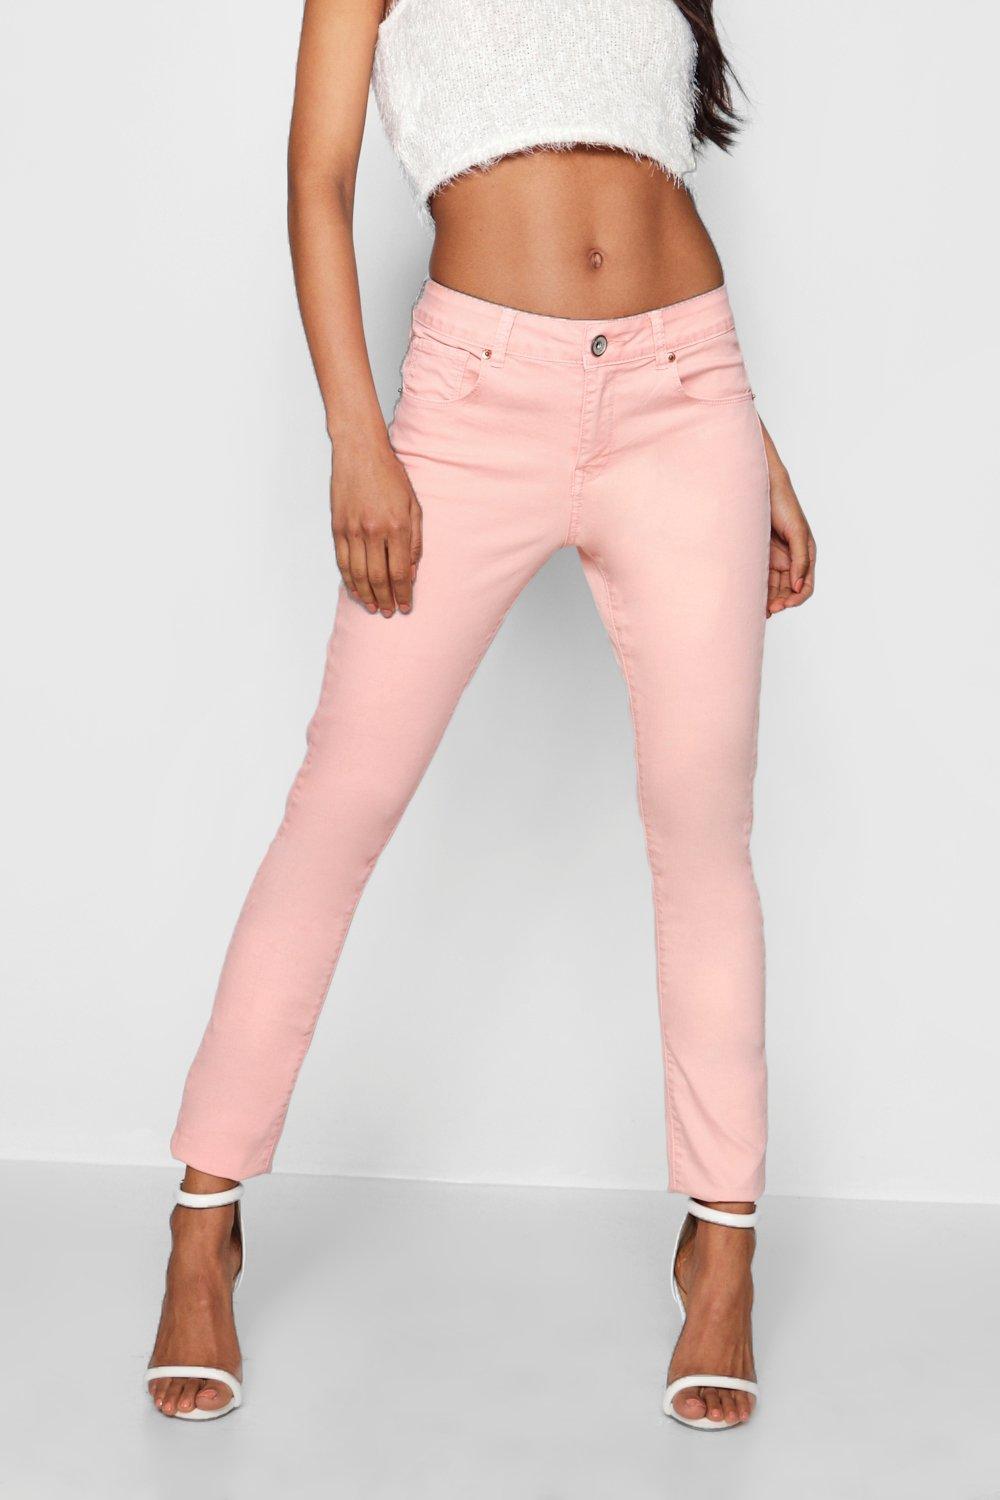 light pink skinny jeans